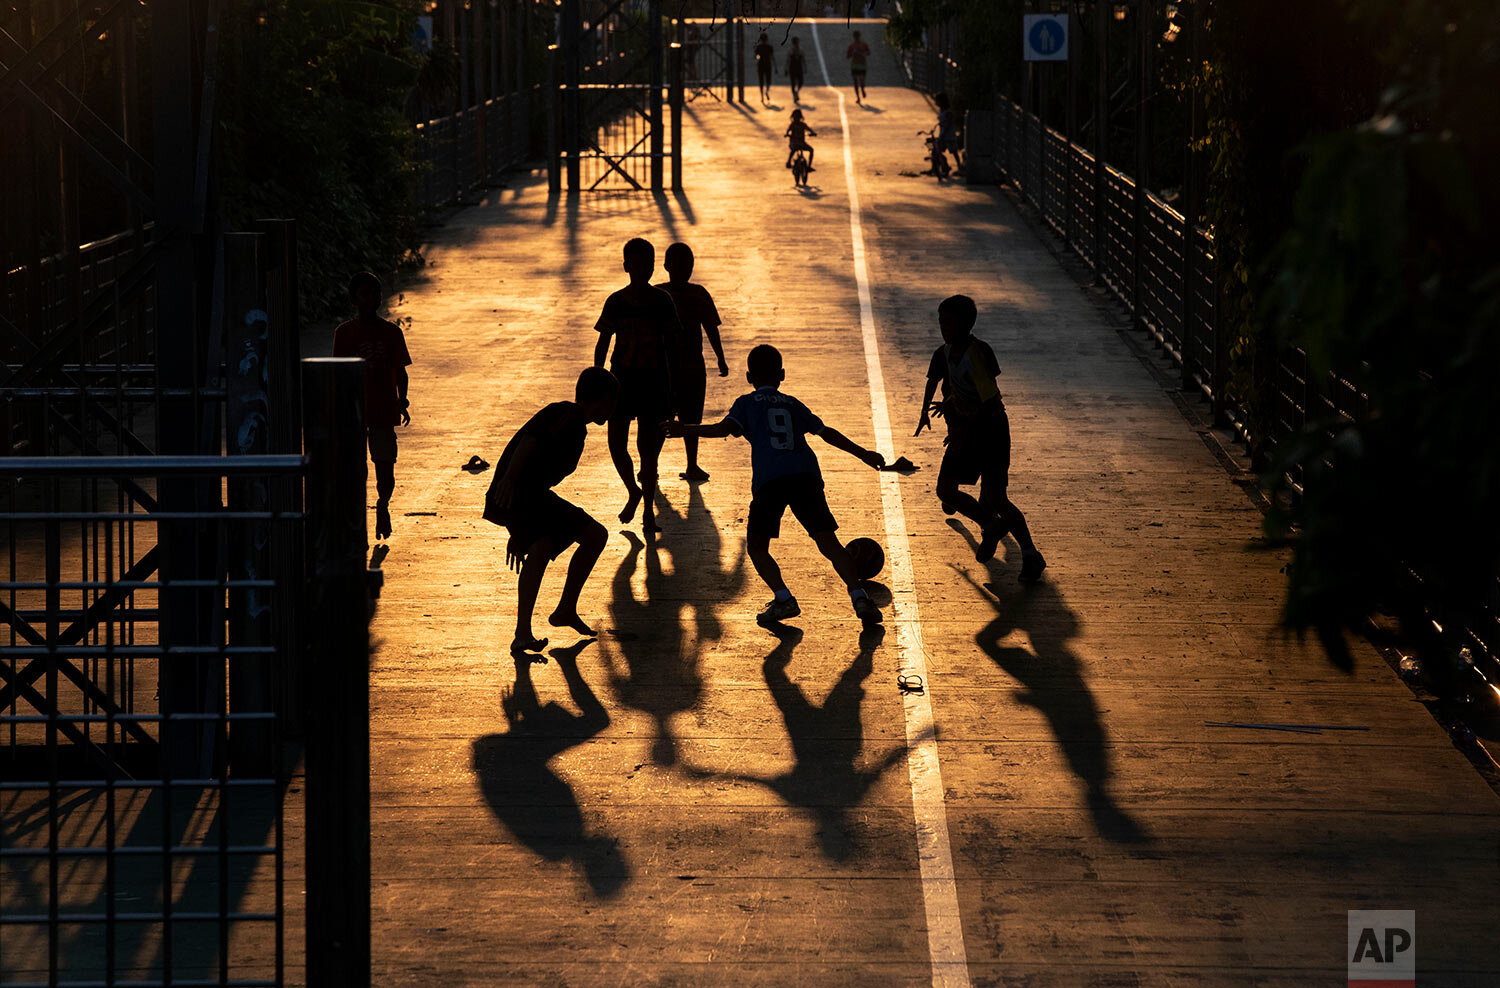  Children play soccer in the afternoon light in Bangkok, Thailand, Wednesday, March 25, 2020. (AP Photo/Gemunu Amarasinghe) 